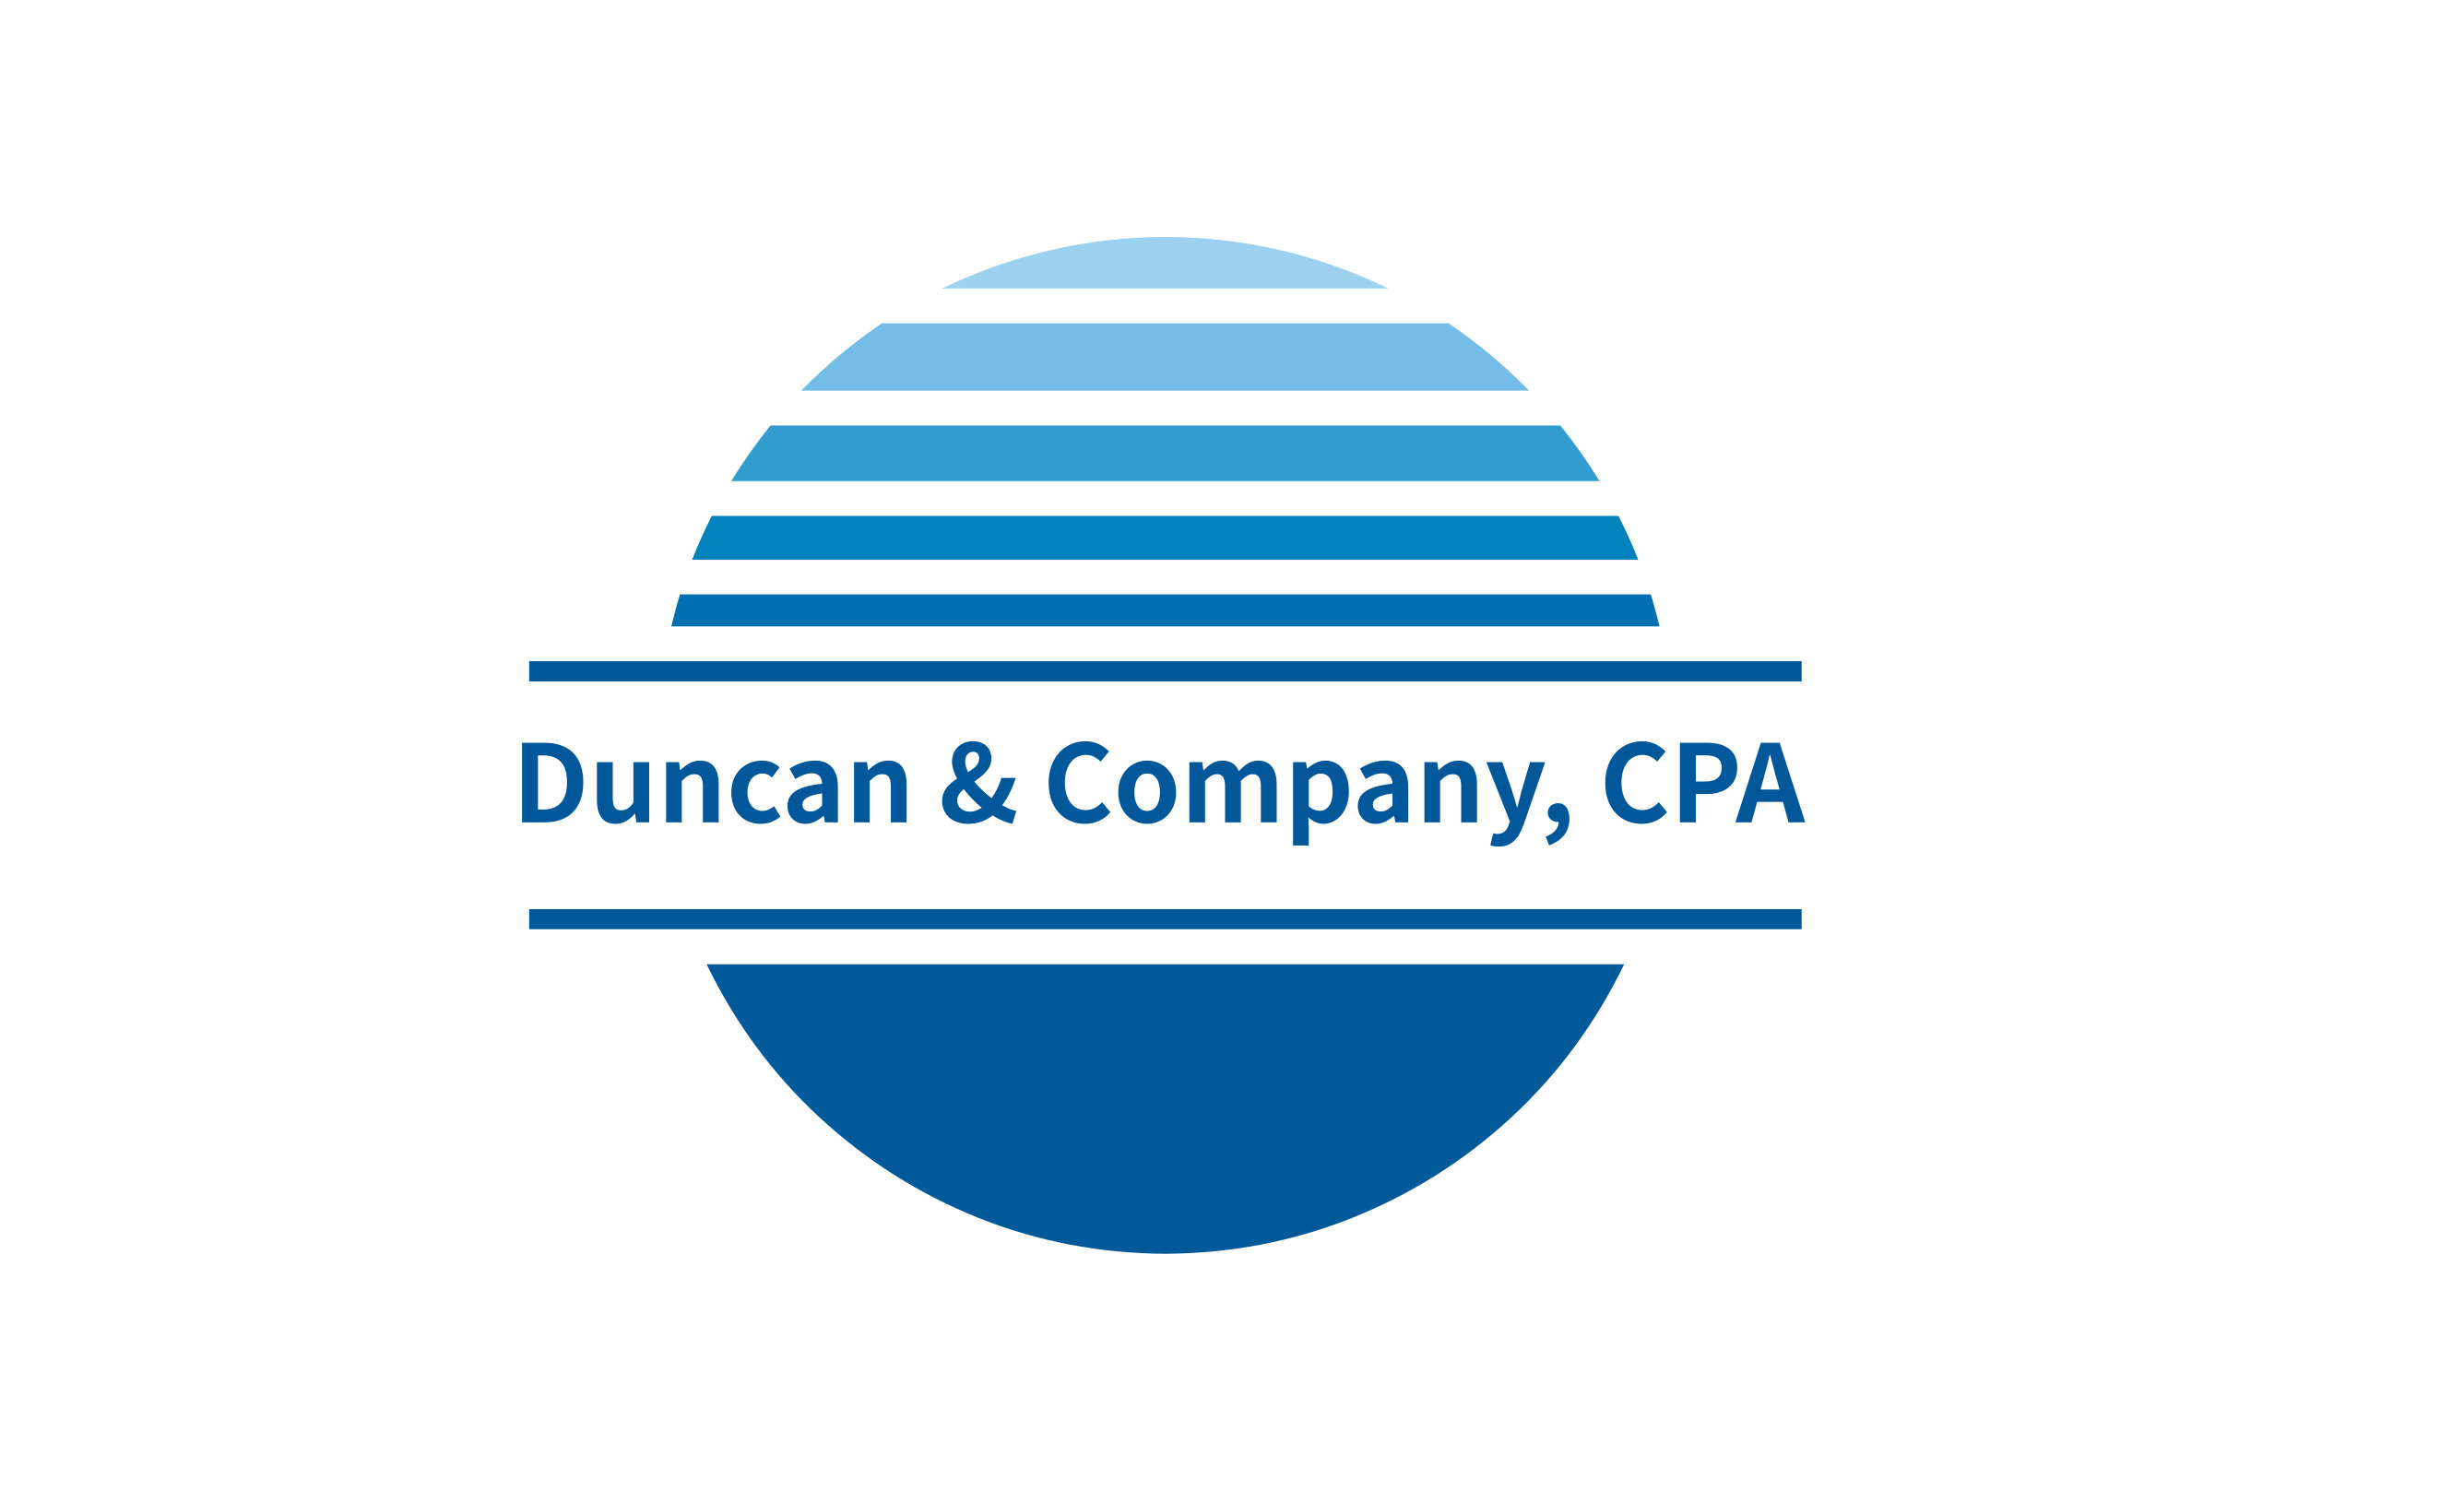 Duncan & Company, CPA